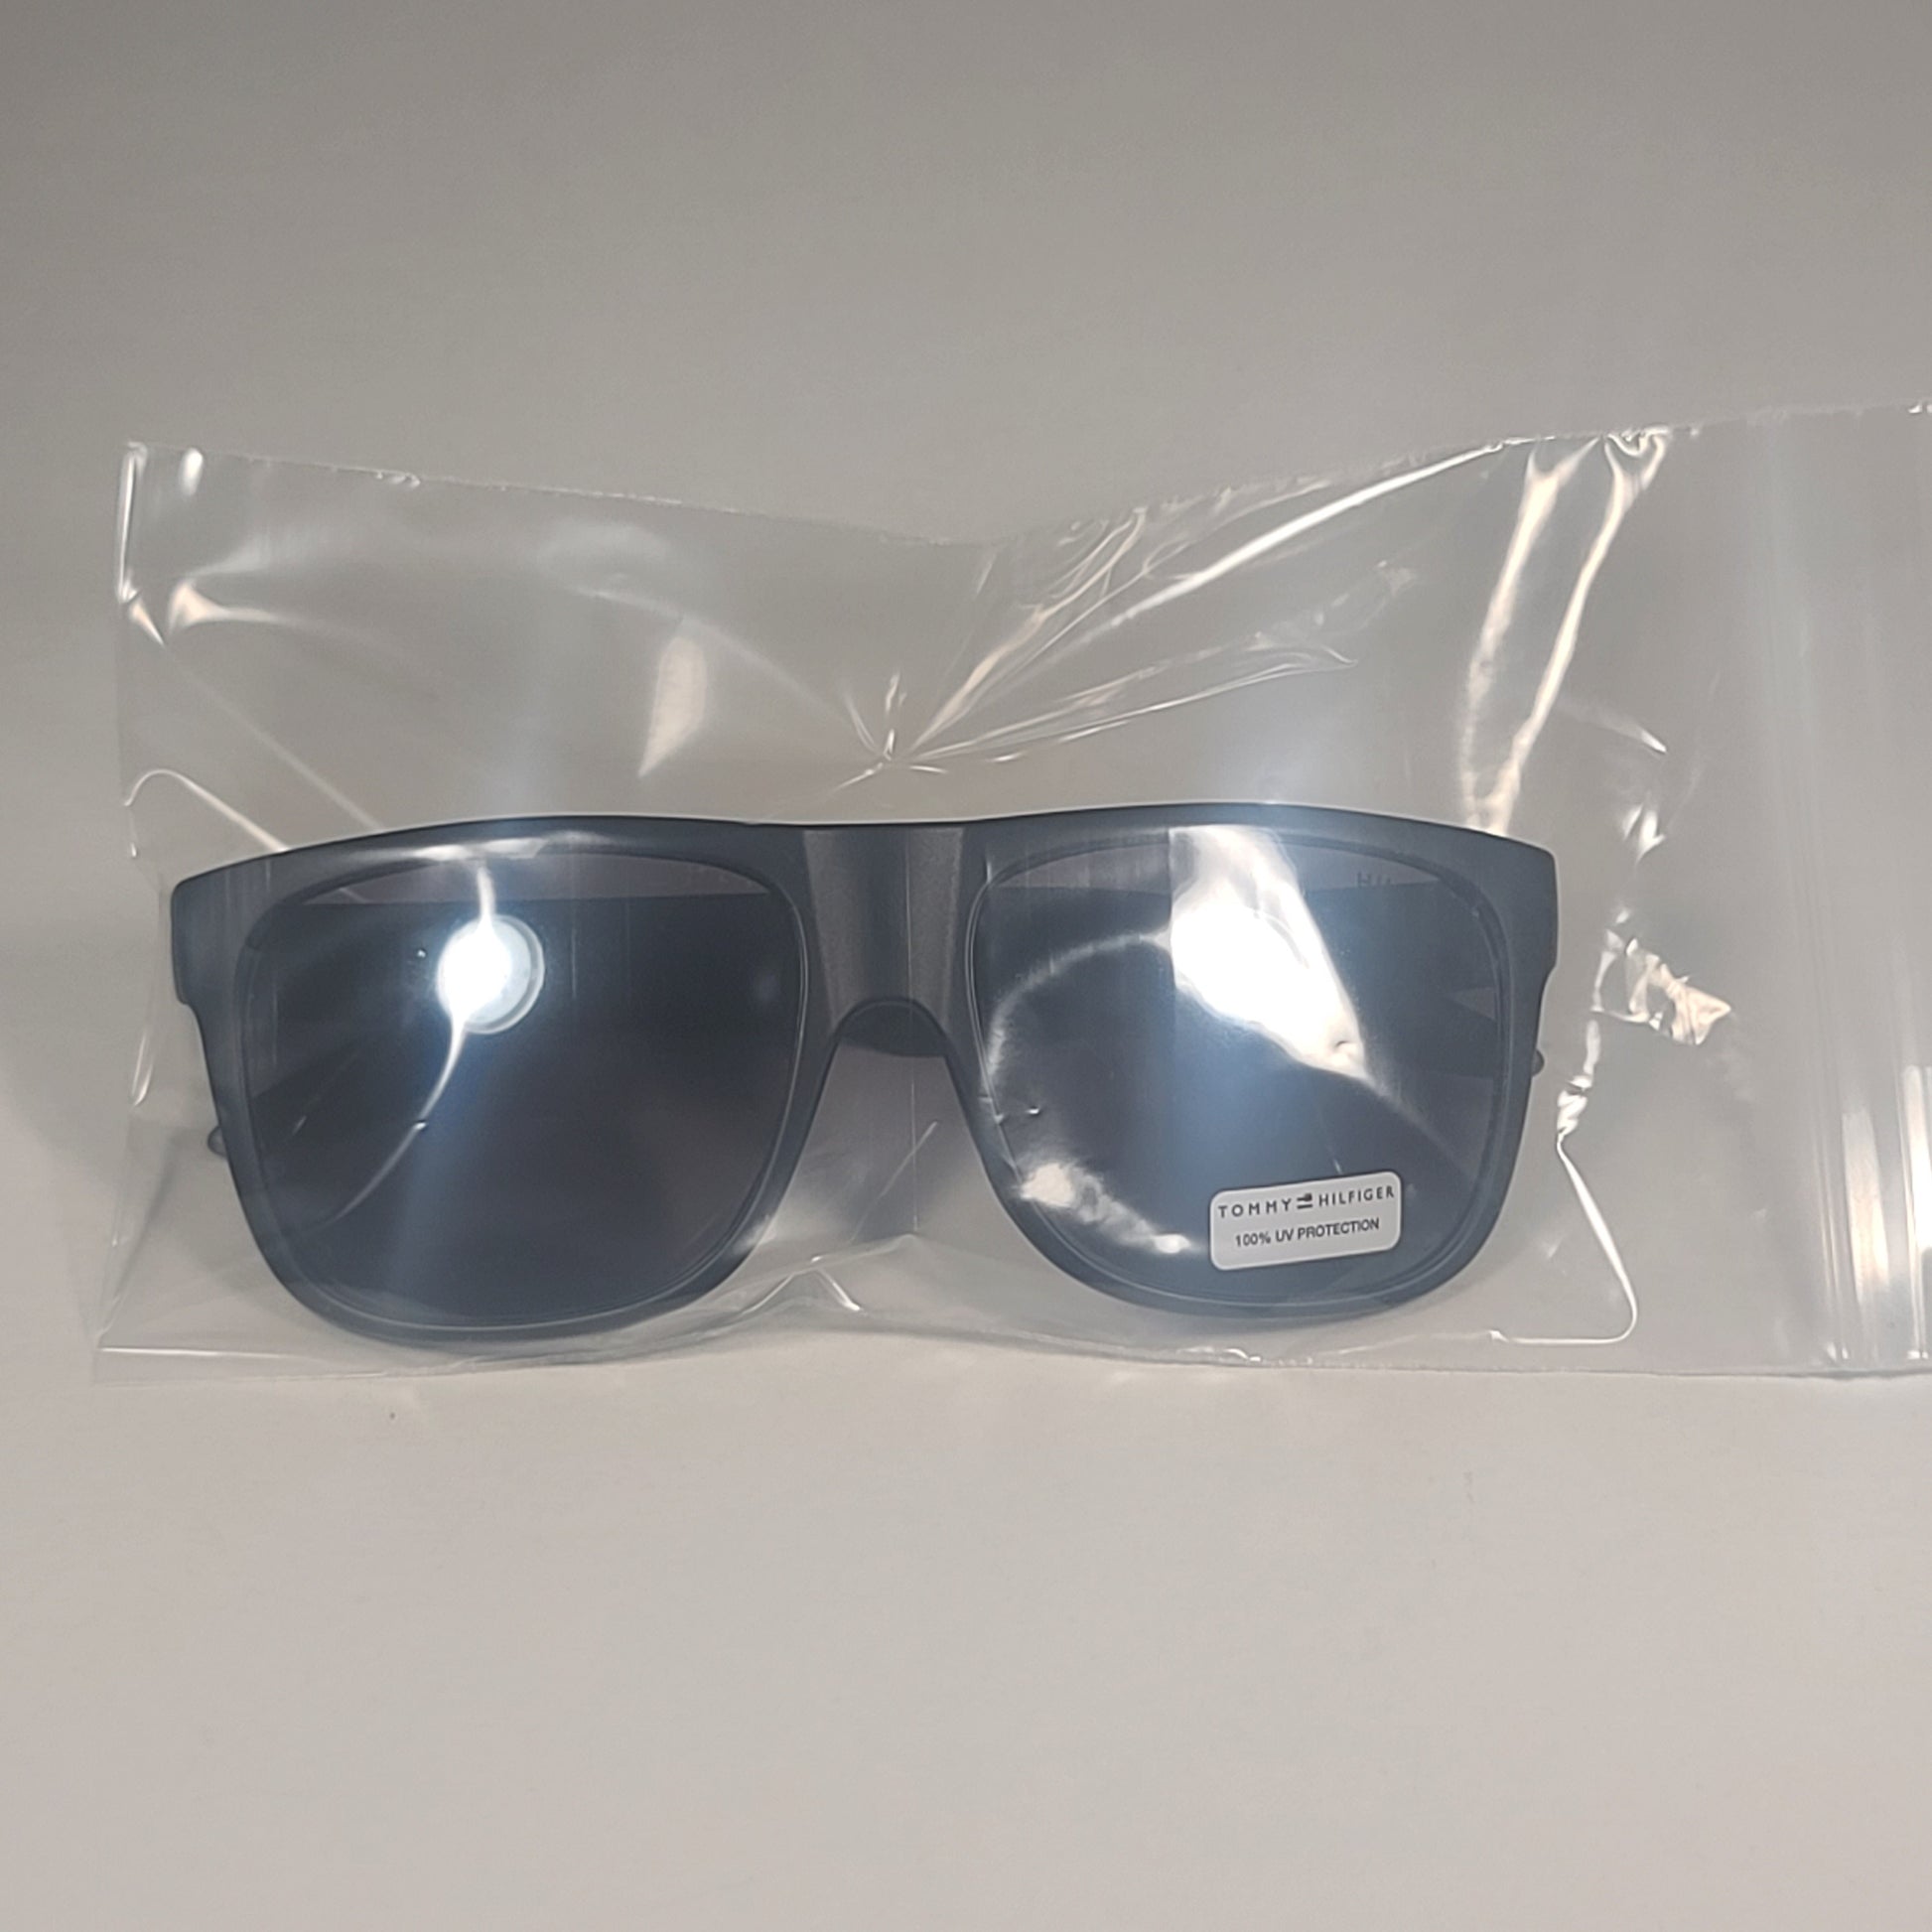 Tommy Hilfiger ’Tanner’ MP OM302 Square Sunglasses Matte Black Silver Mirror 57mm - Sunglasses